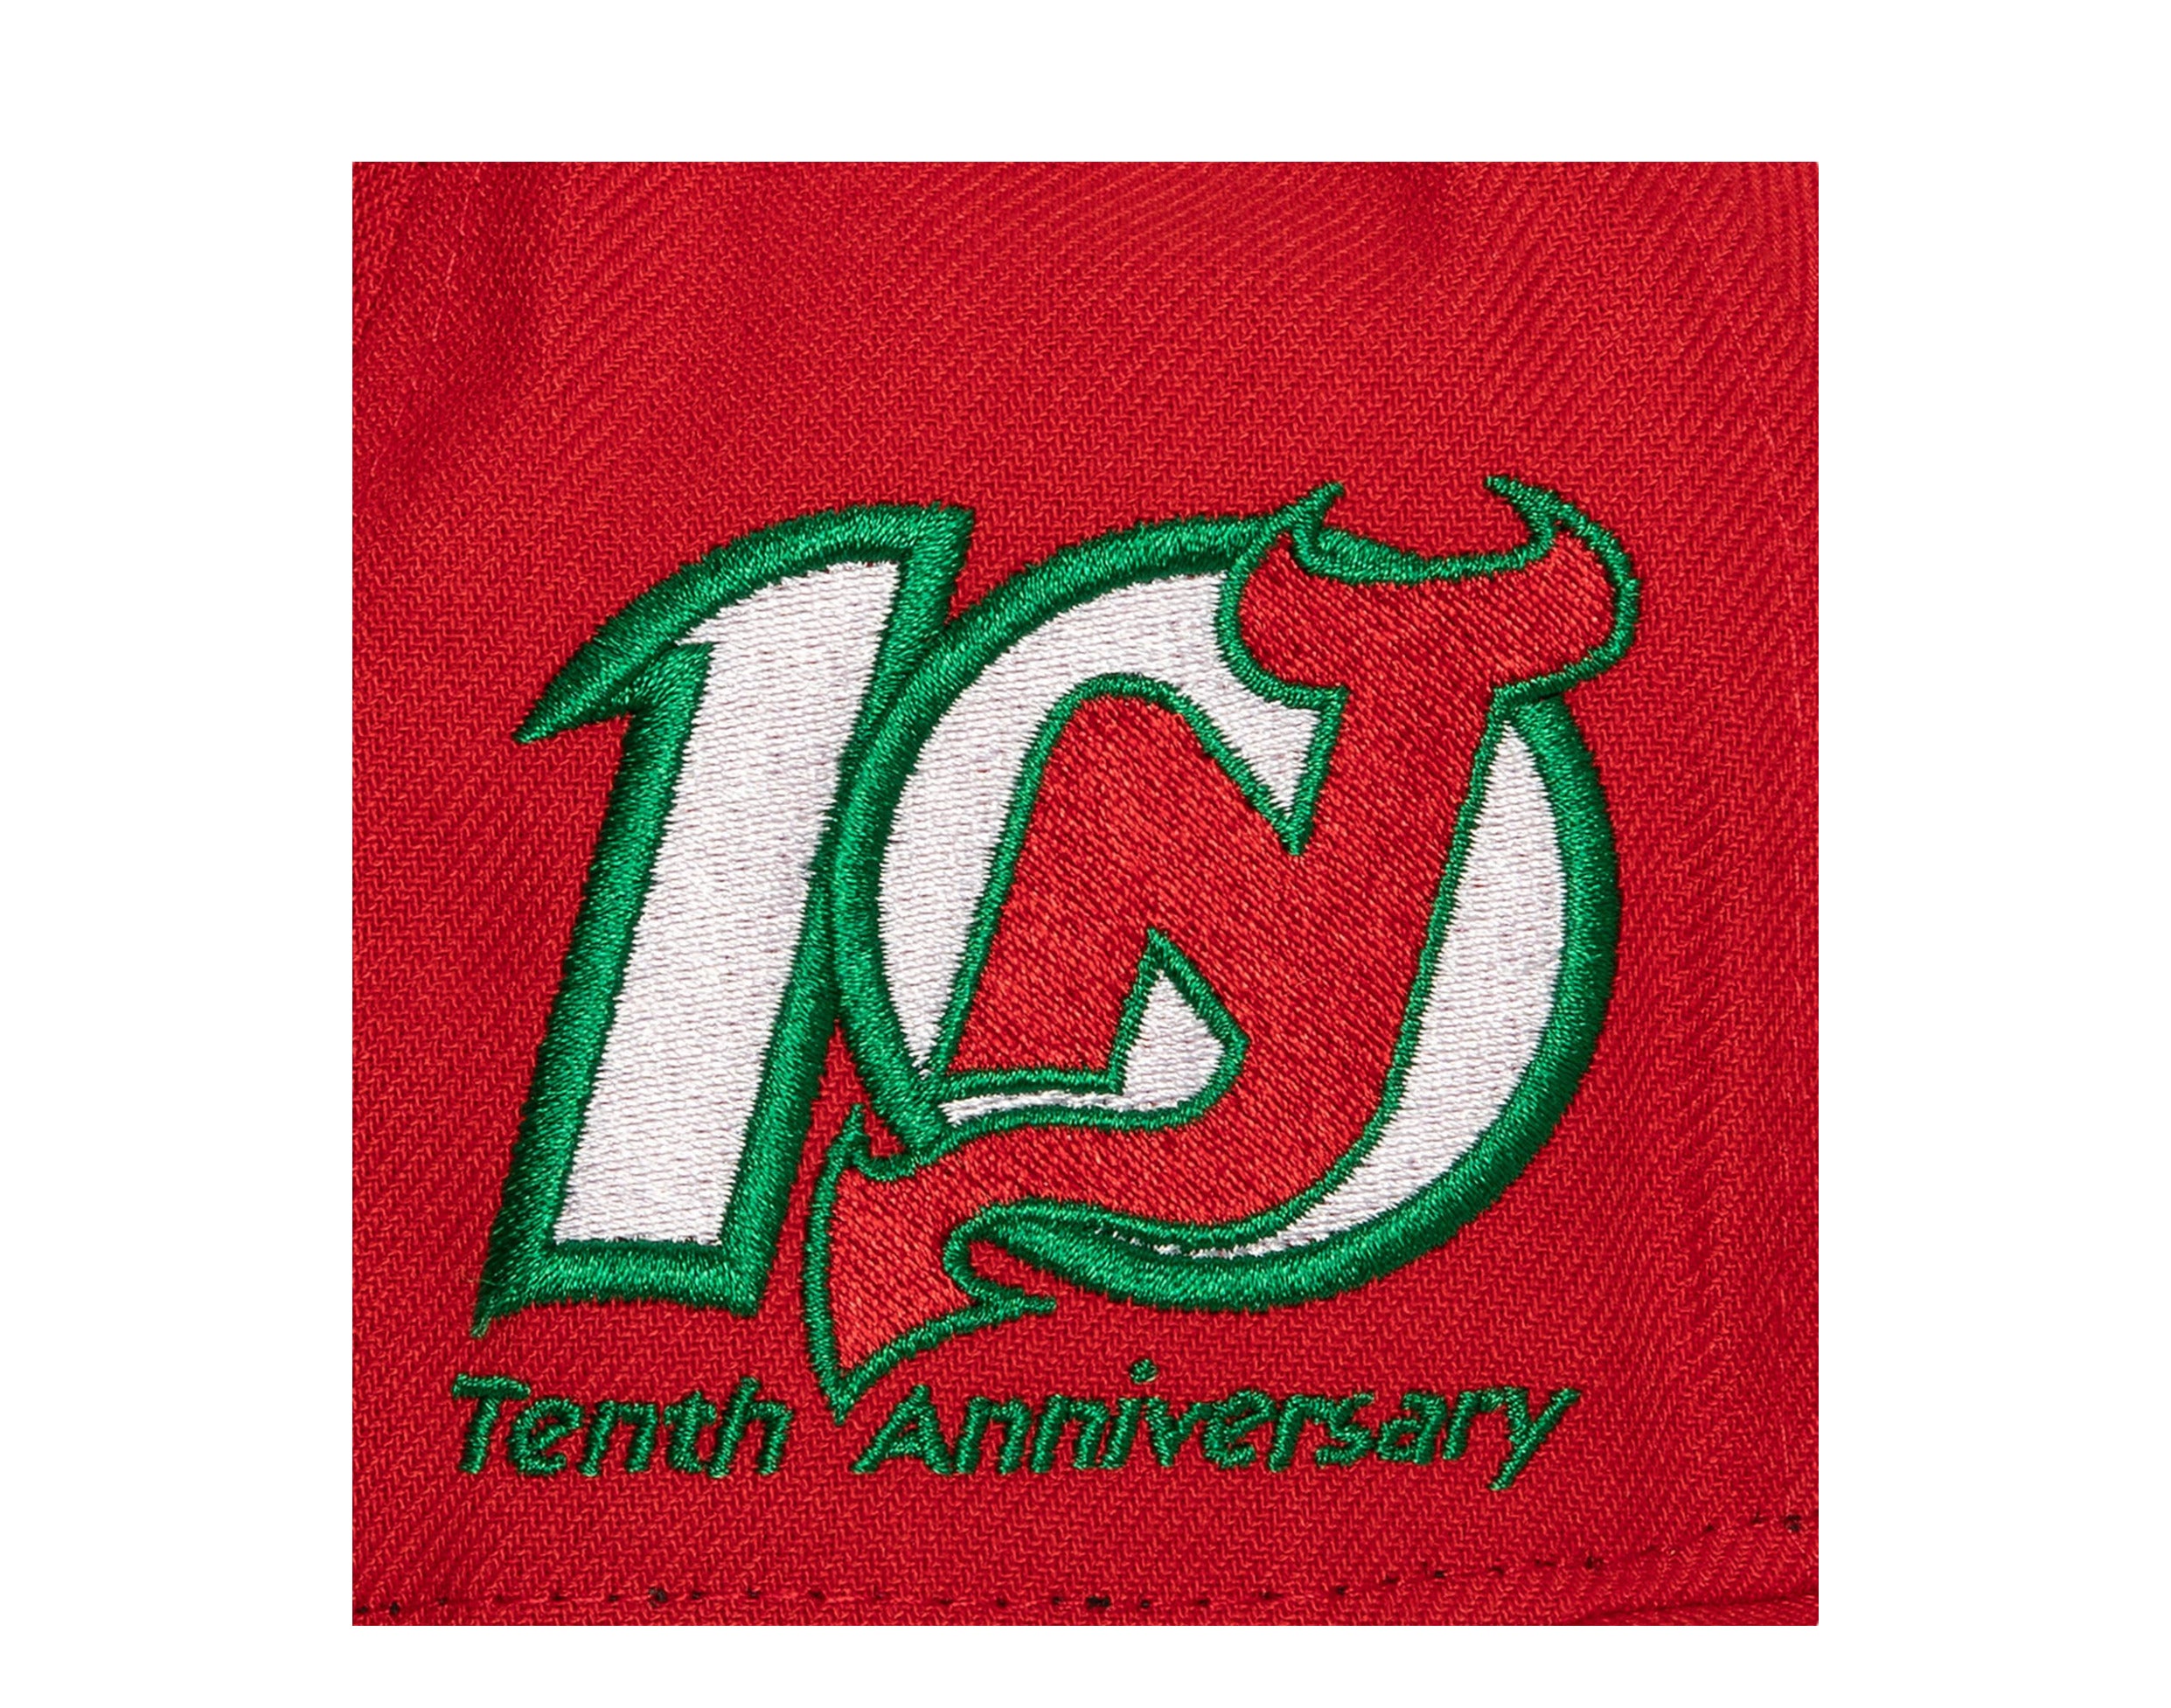 Mitchell & Ness, Shirts, Mitchell Ness Vintage Hockey Nhl Jersey Shirt  Medium M Chicago Blackhawks Red